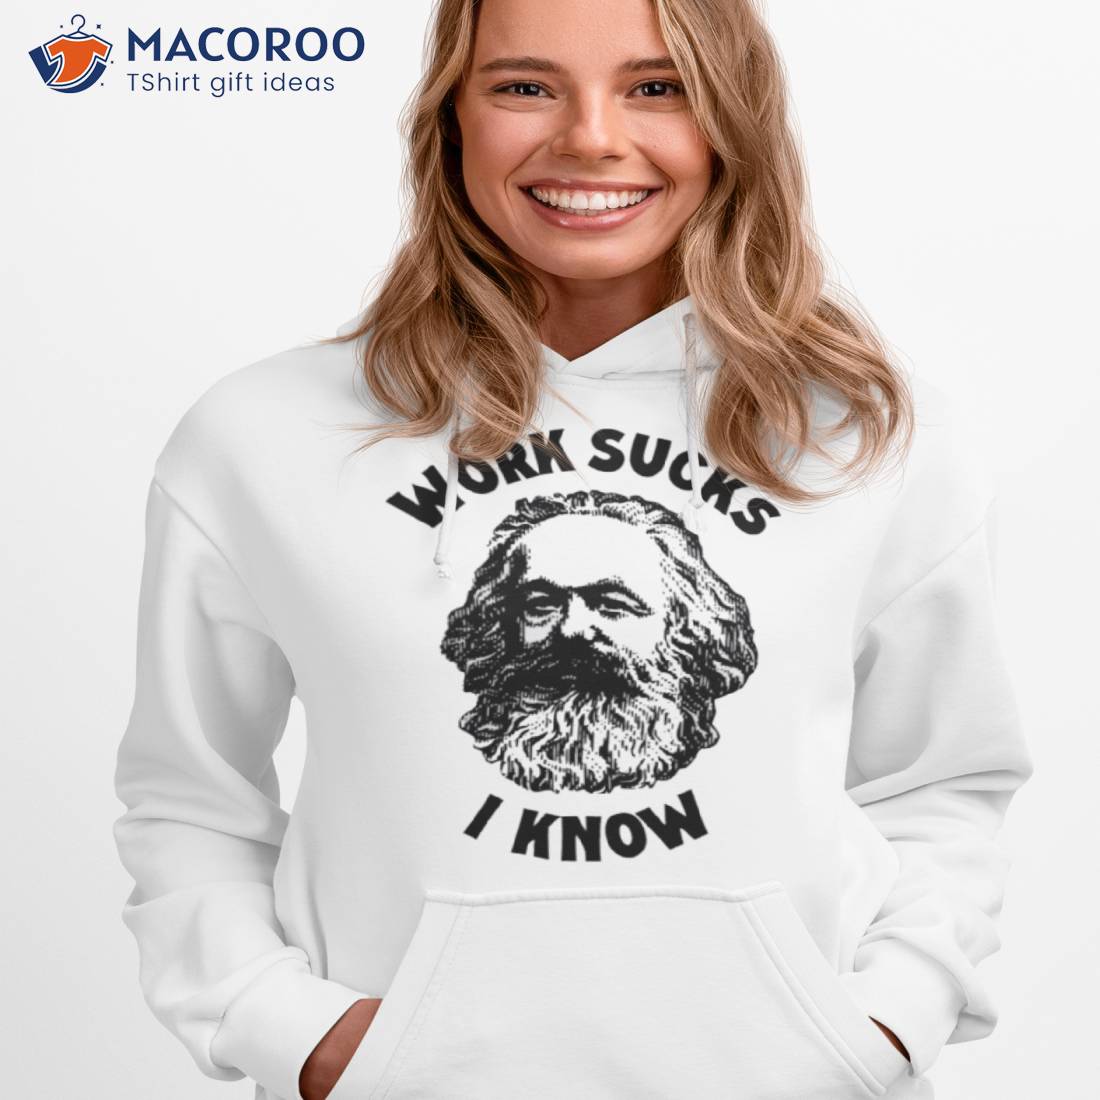 https://images.macoroo.com/wp-content/uploads/2023/06/work-sucks-i-know-shirt-hoodie-1.jpg